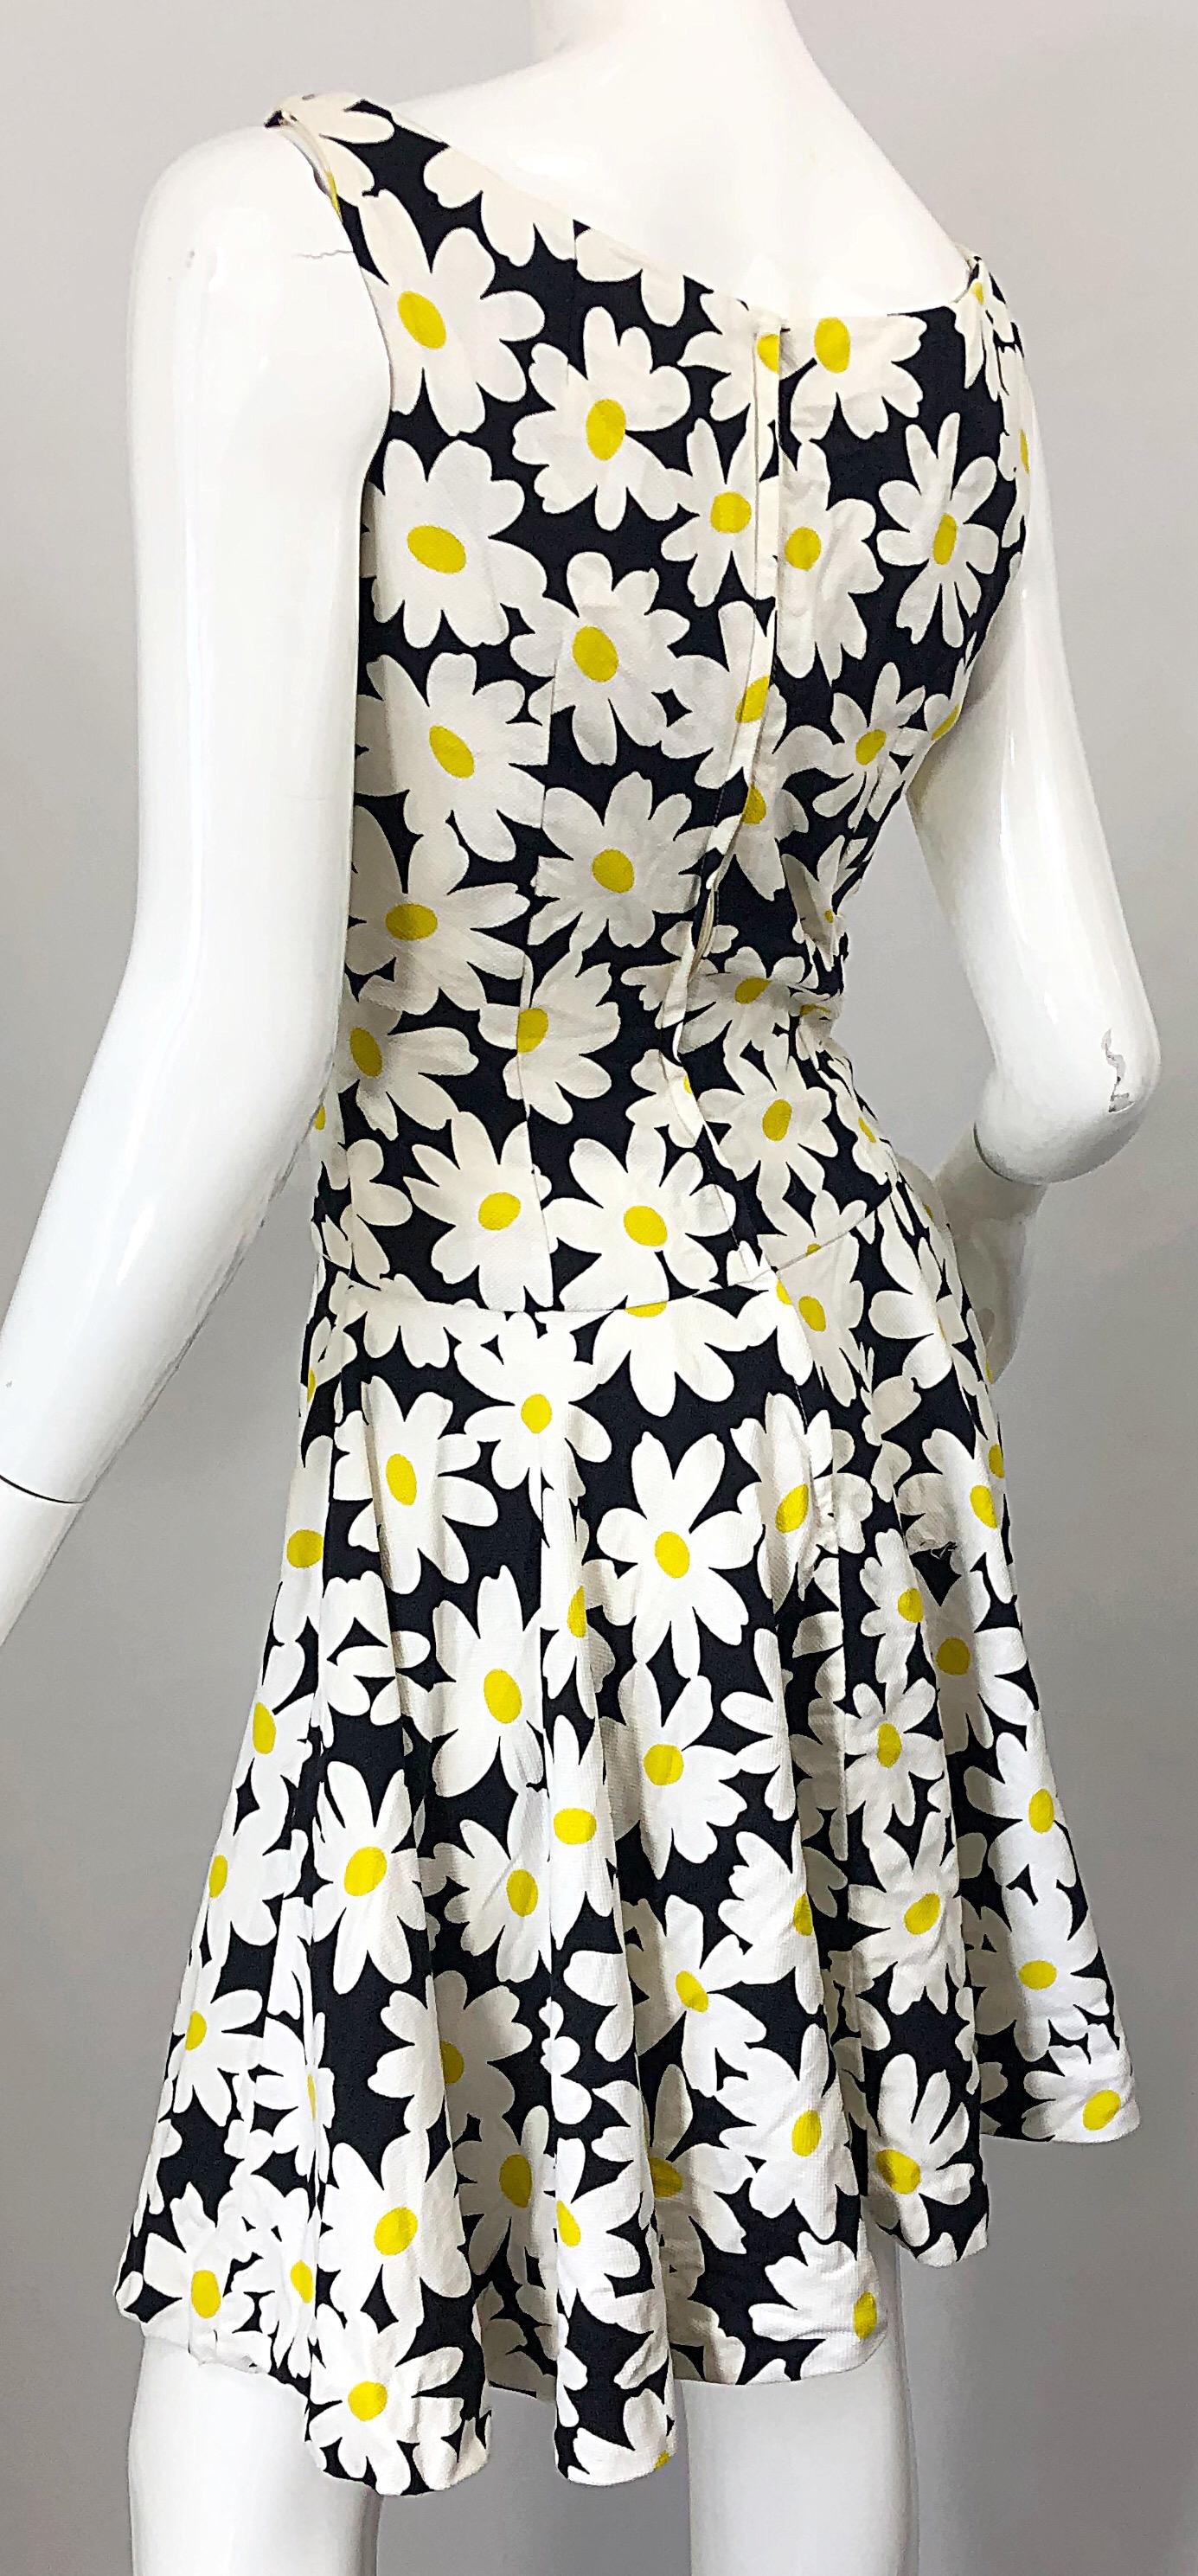 Women's I Magnin 1960s Black and White Daisy Print Pique Cotton Vintage 60s A Line Dress For Sale